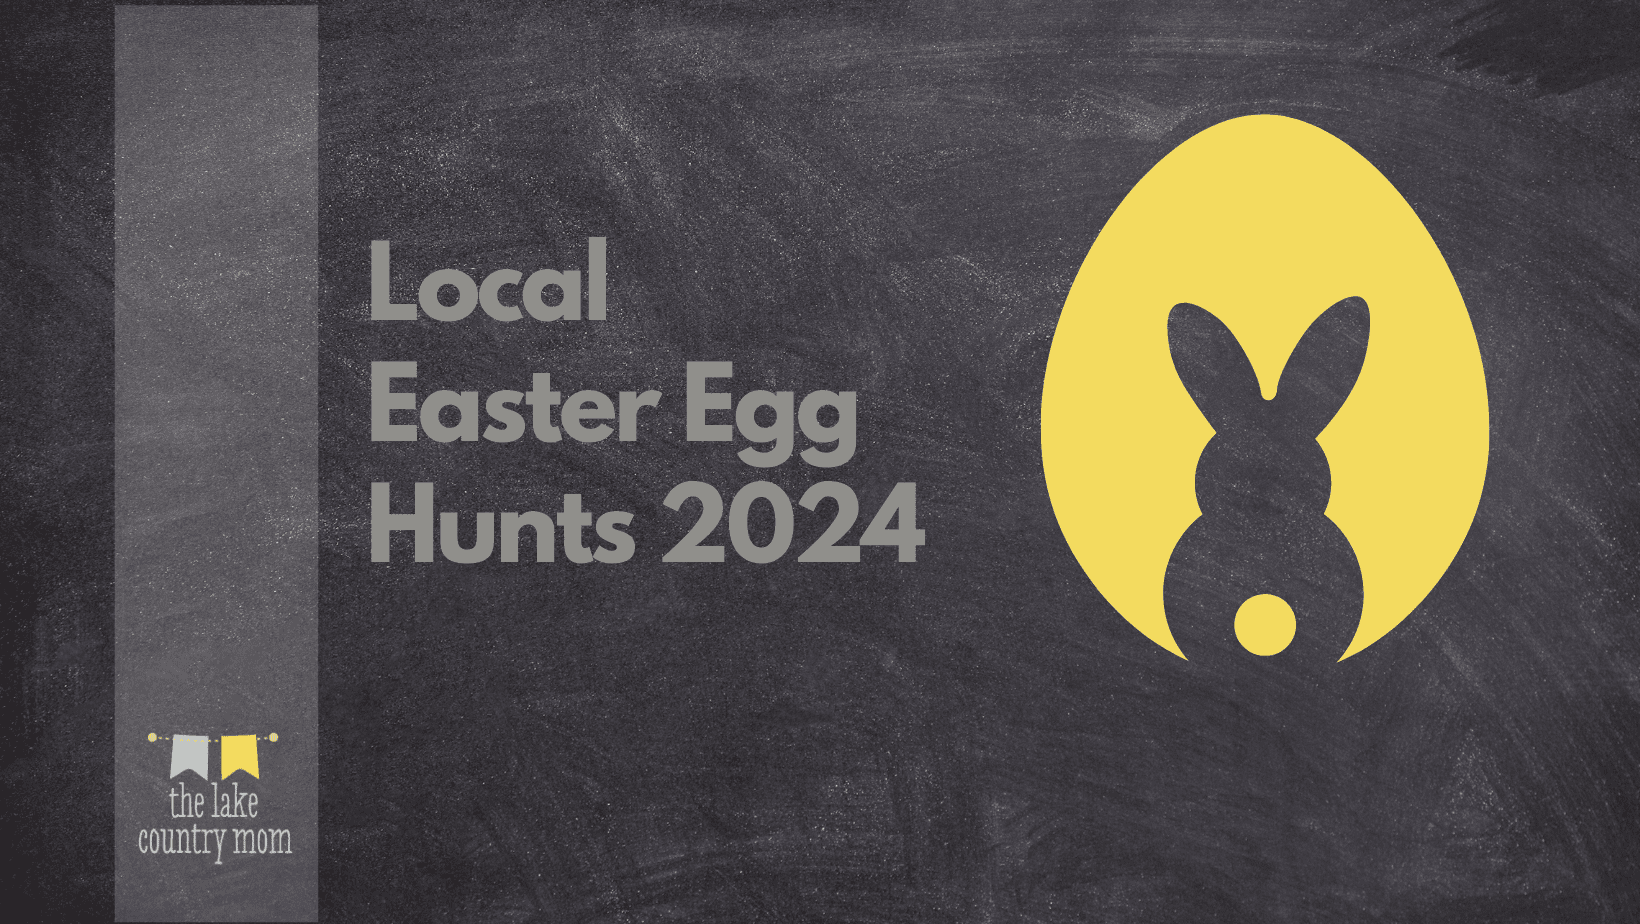 Local Easter Egg Hunts 2024